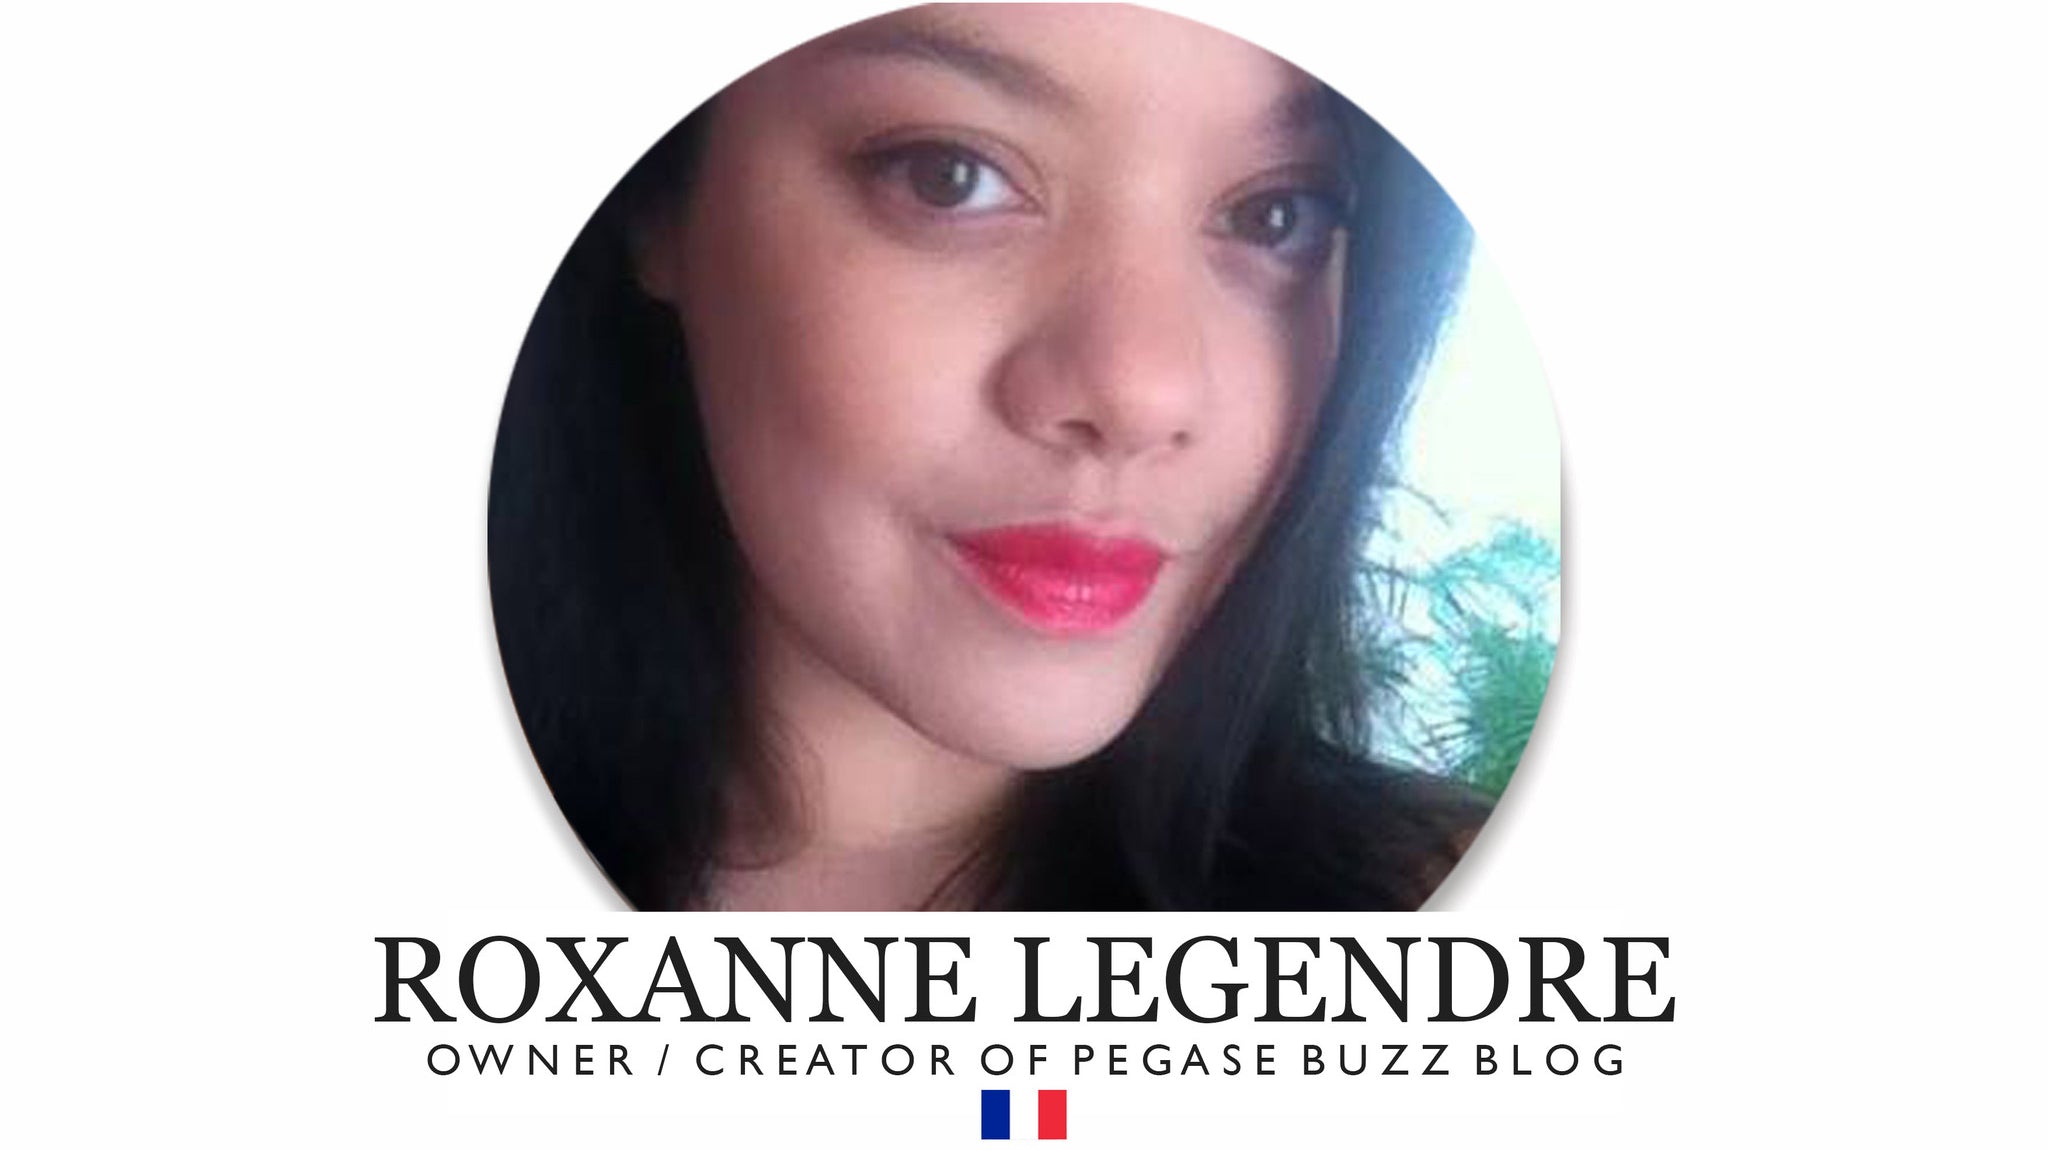 Blog Take Over 04. Roxanne Legendre - Successful PegaseBuzz Blog Founder